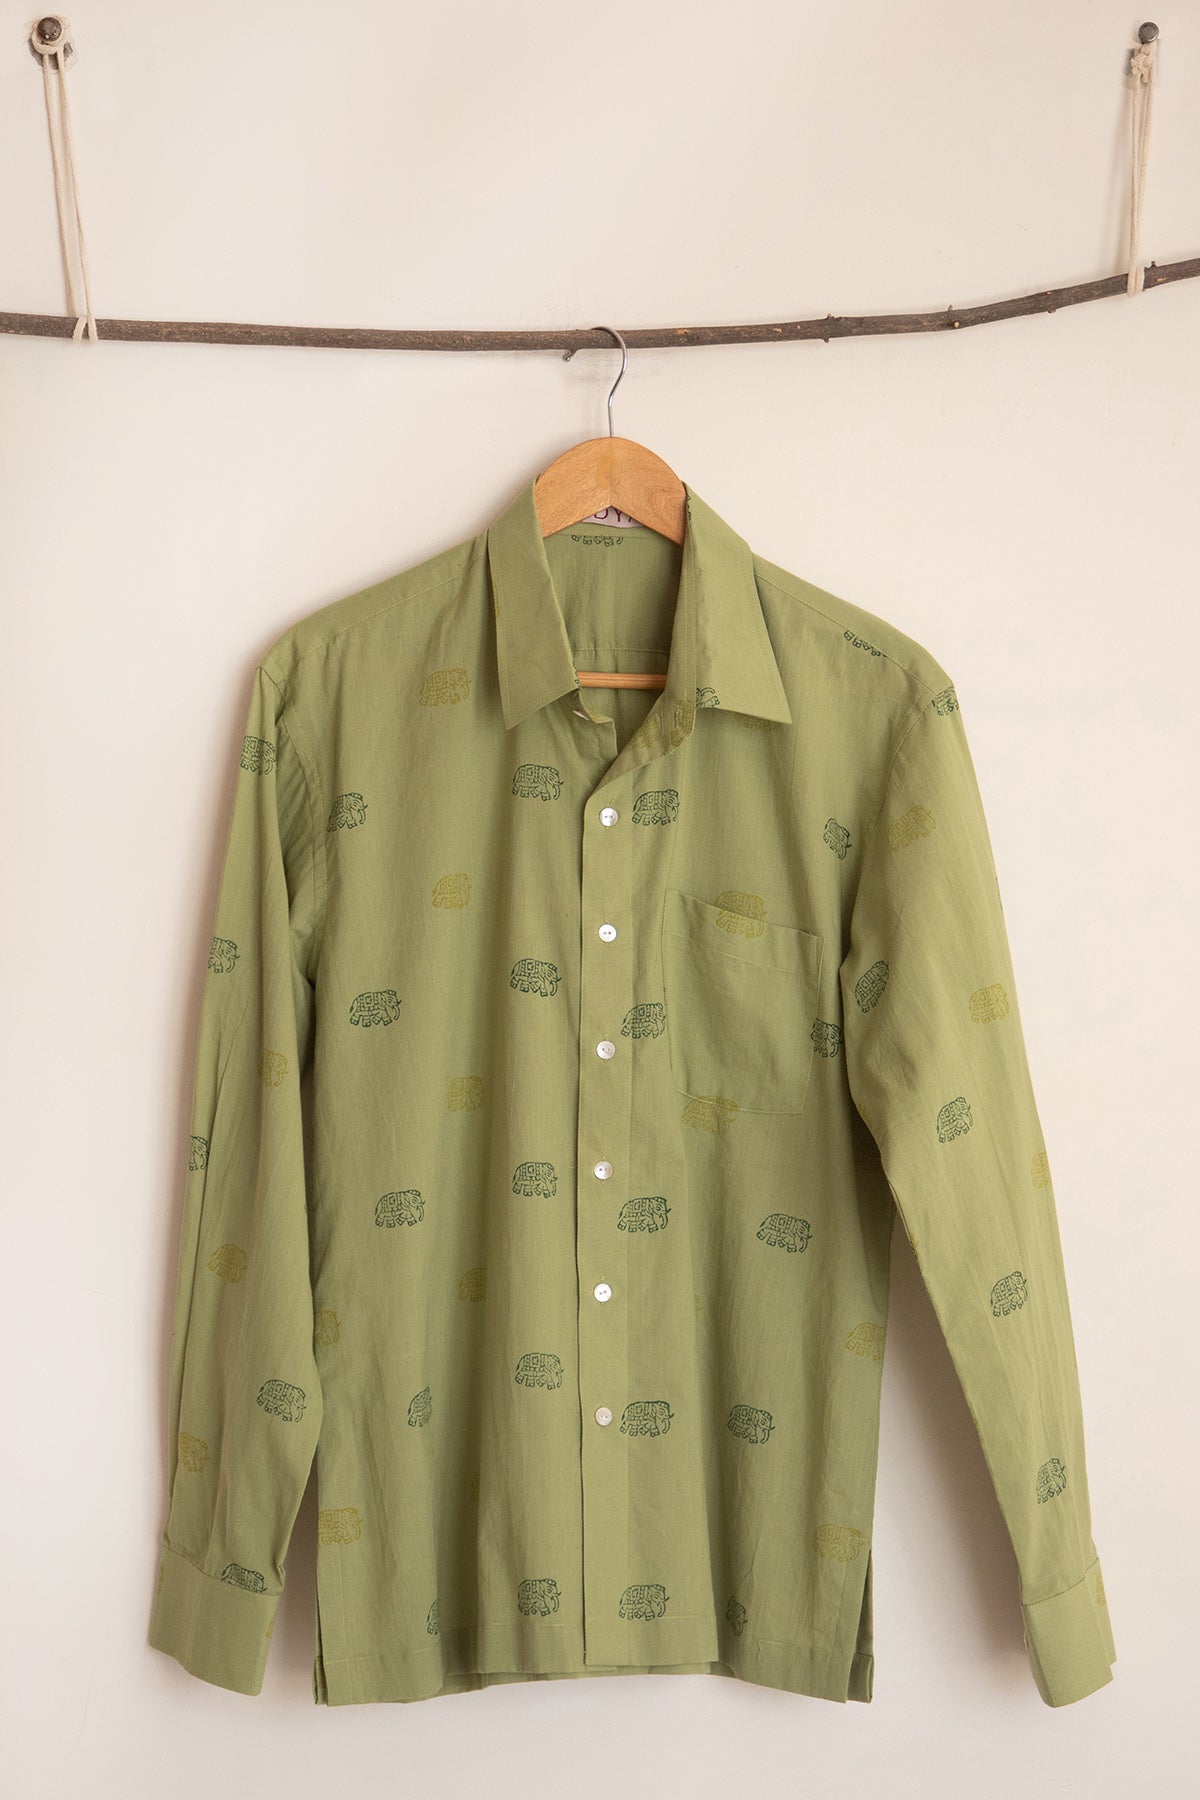 Olive Green Men's Shirt